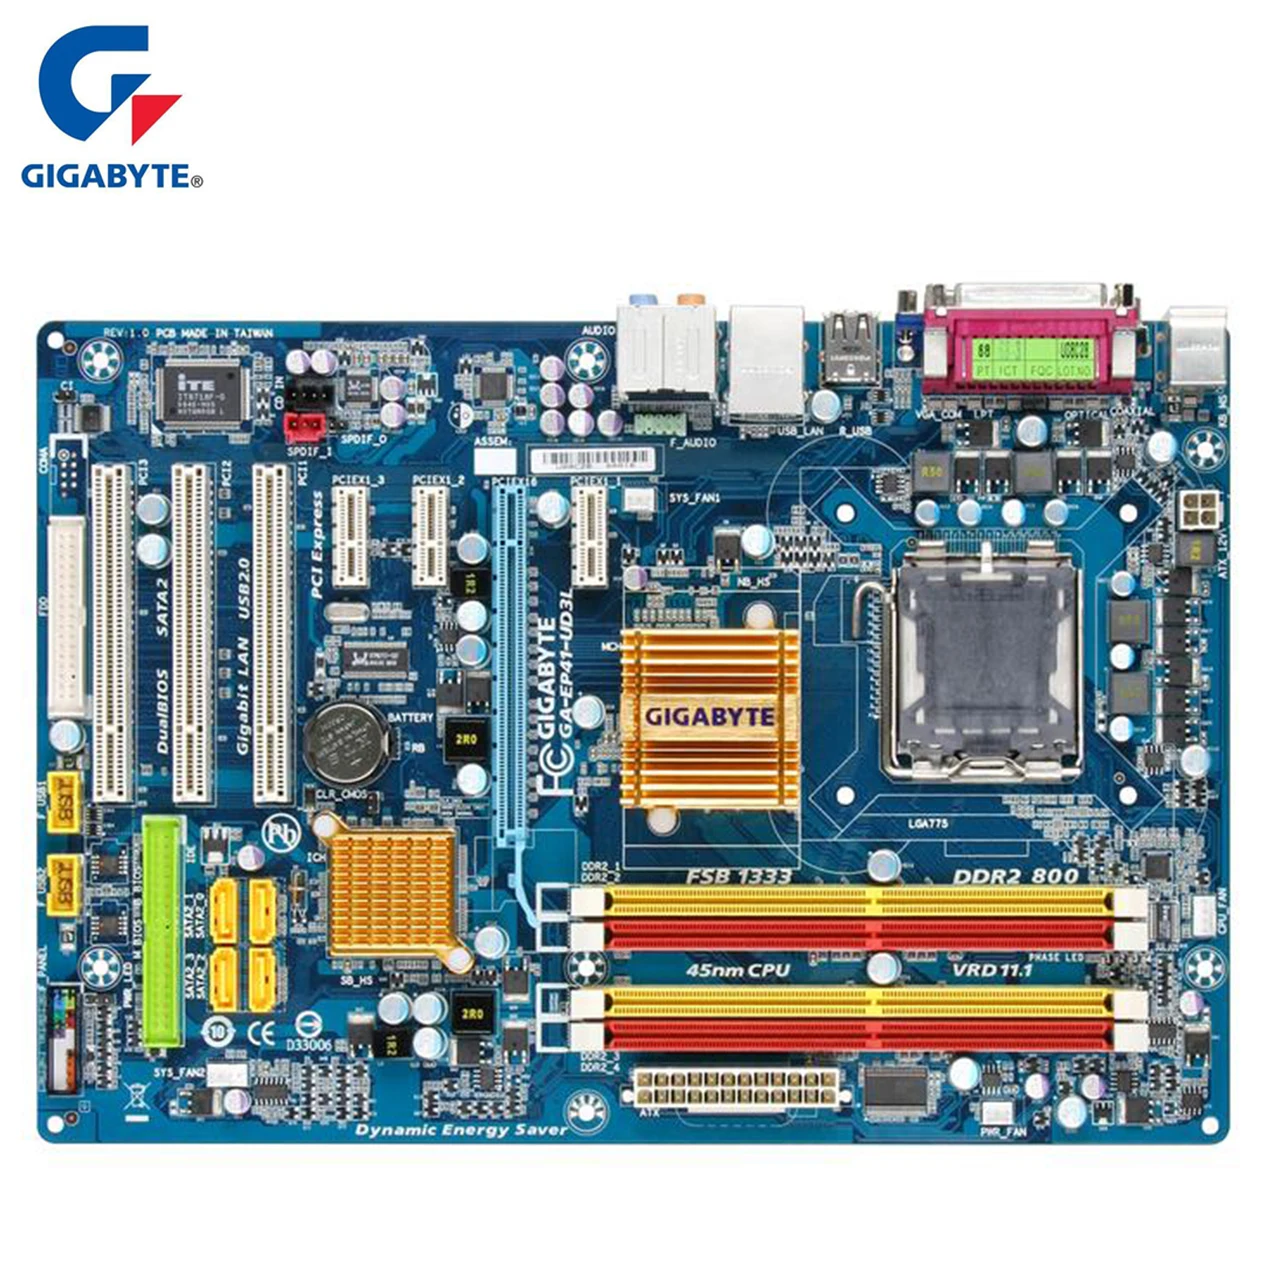 Gigabyte GA-EP41-US3L Motherboard For Intel G41 DDR2 16GB SATA II LGA 775 EP41-US3L Mother board Mainboard Systemboard Used